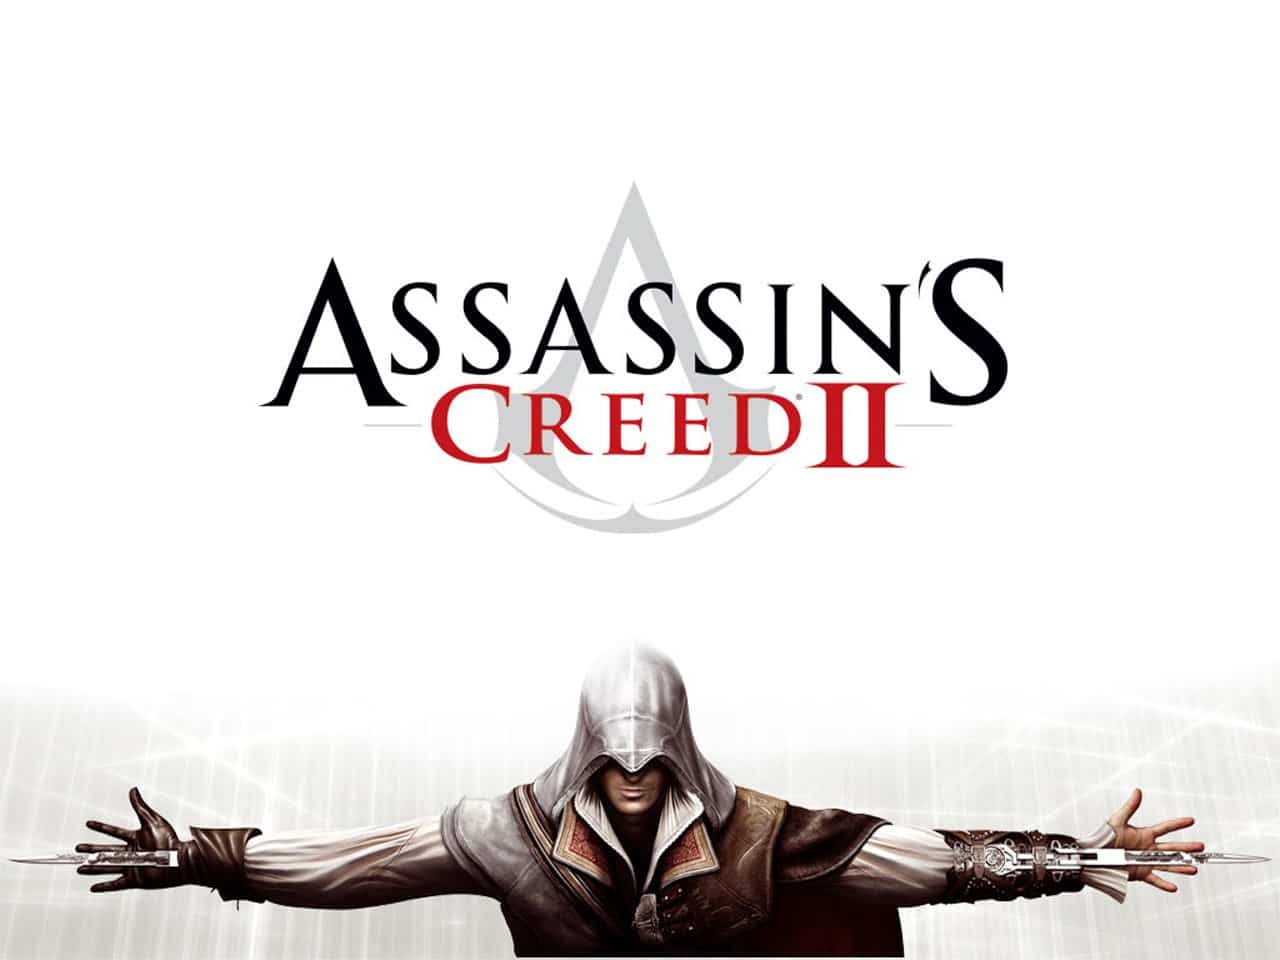 Ezio Assassins Creed Ii Game Mobile Wallpaper Assassin Creed Ezio   Imágenes españoles